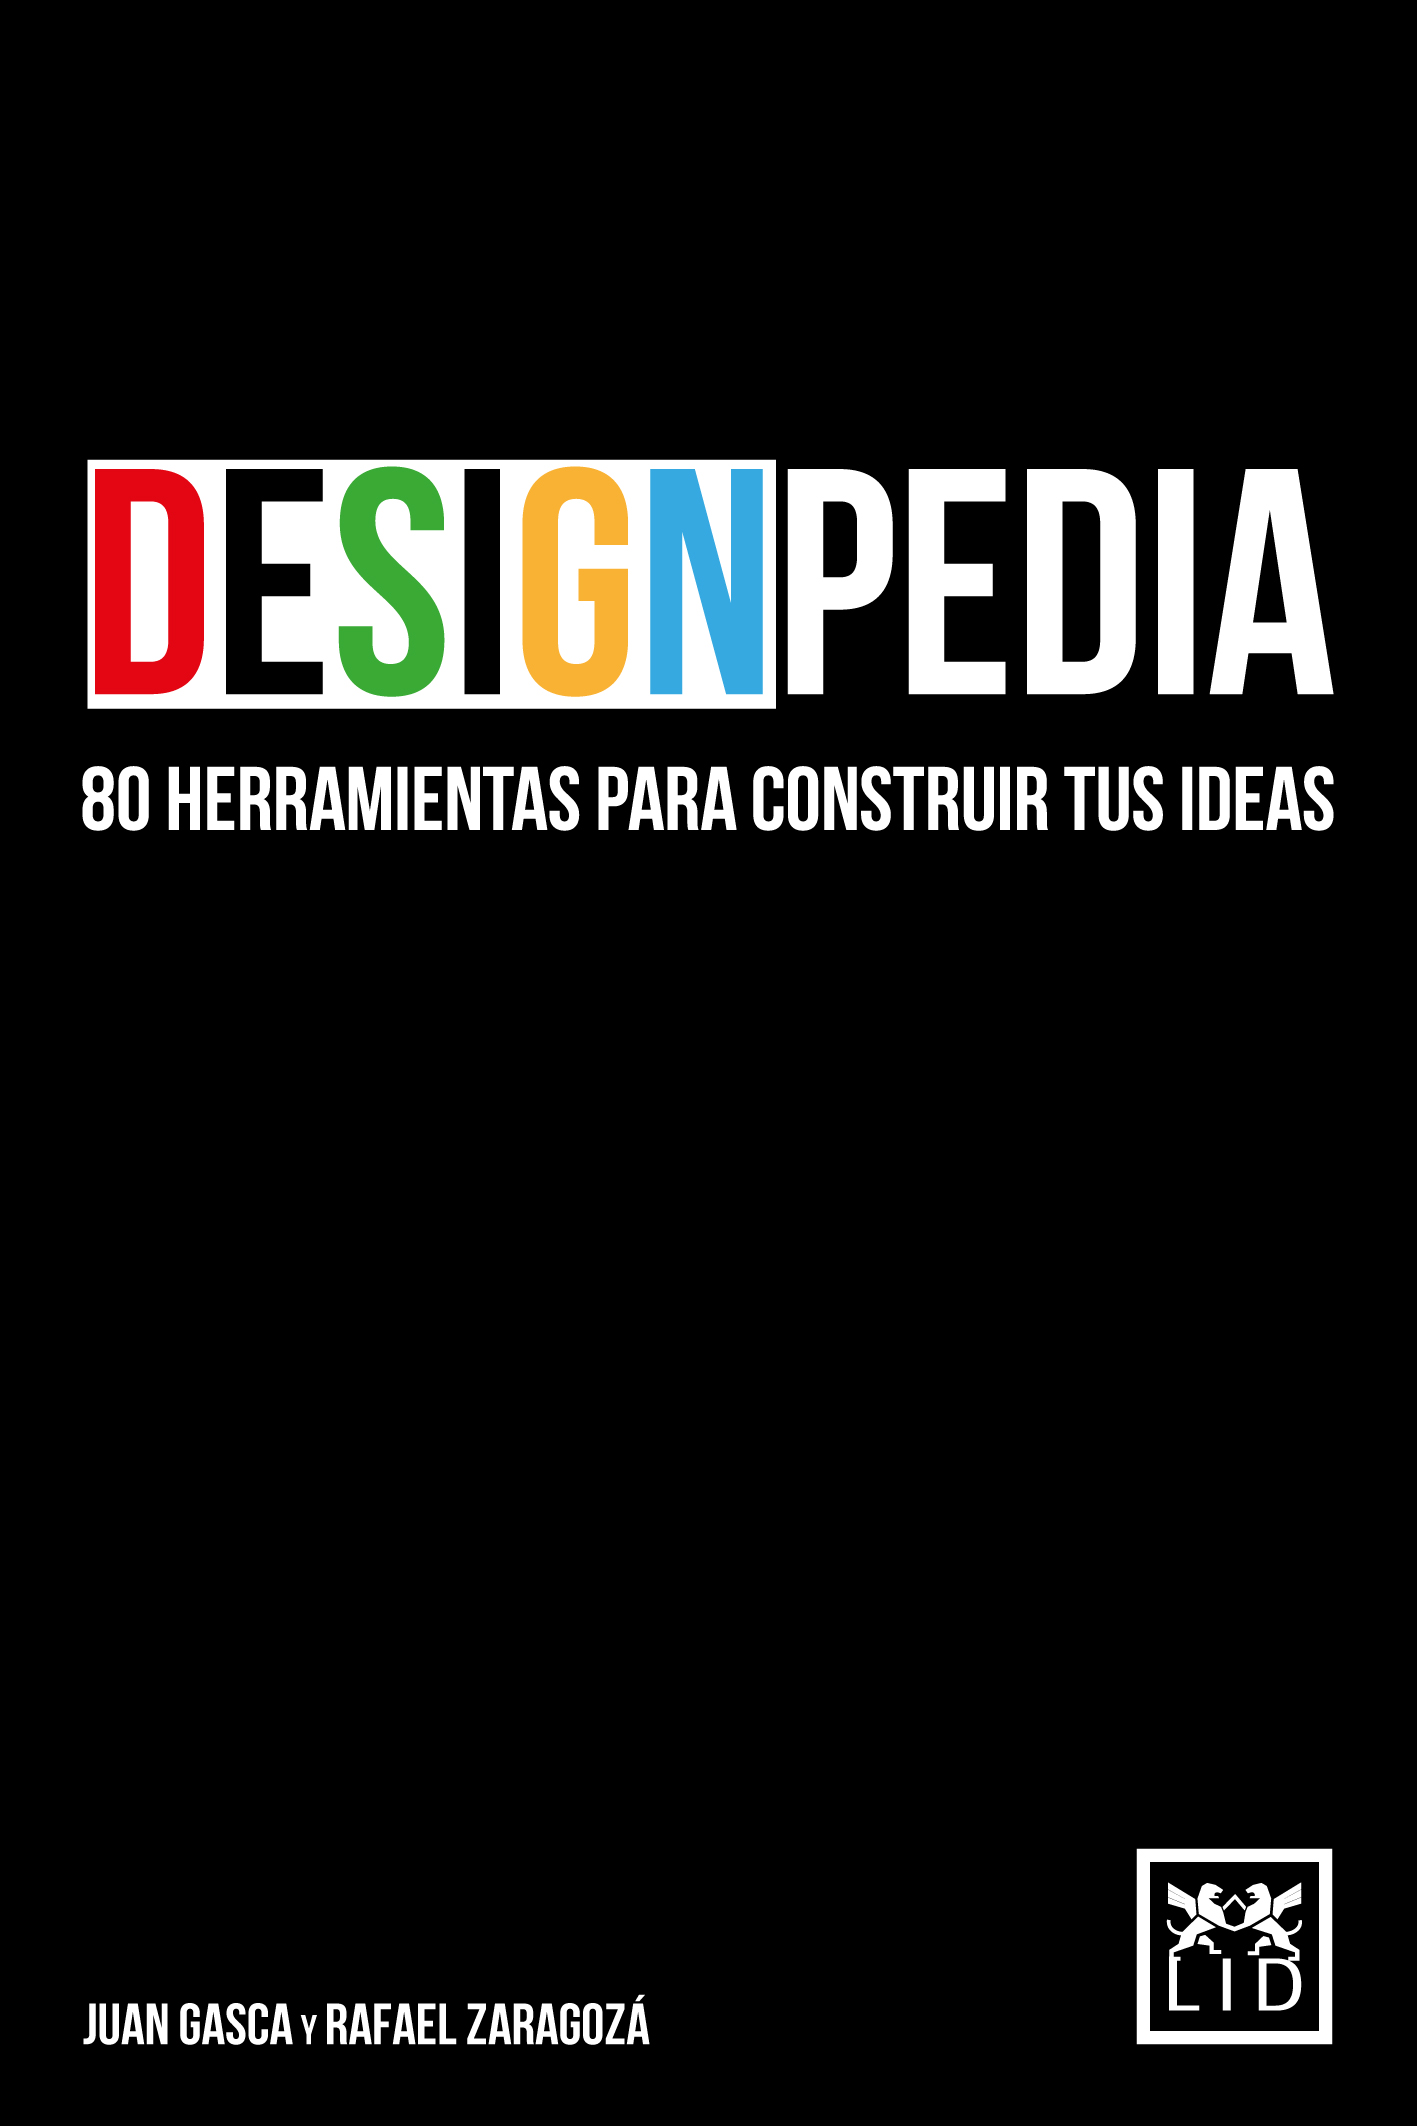 Designpedia. 80 herramientas para construir tus ideas.